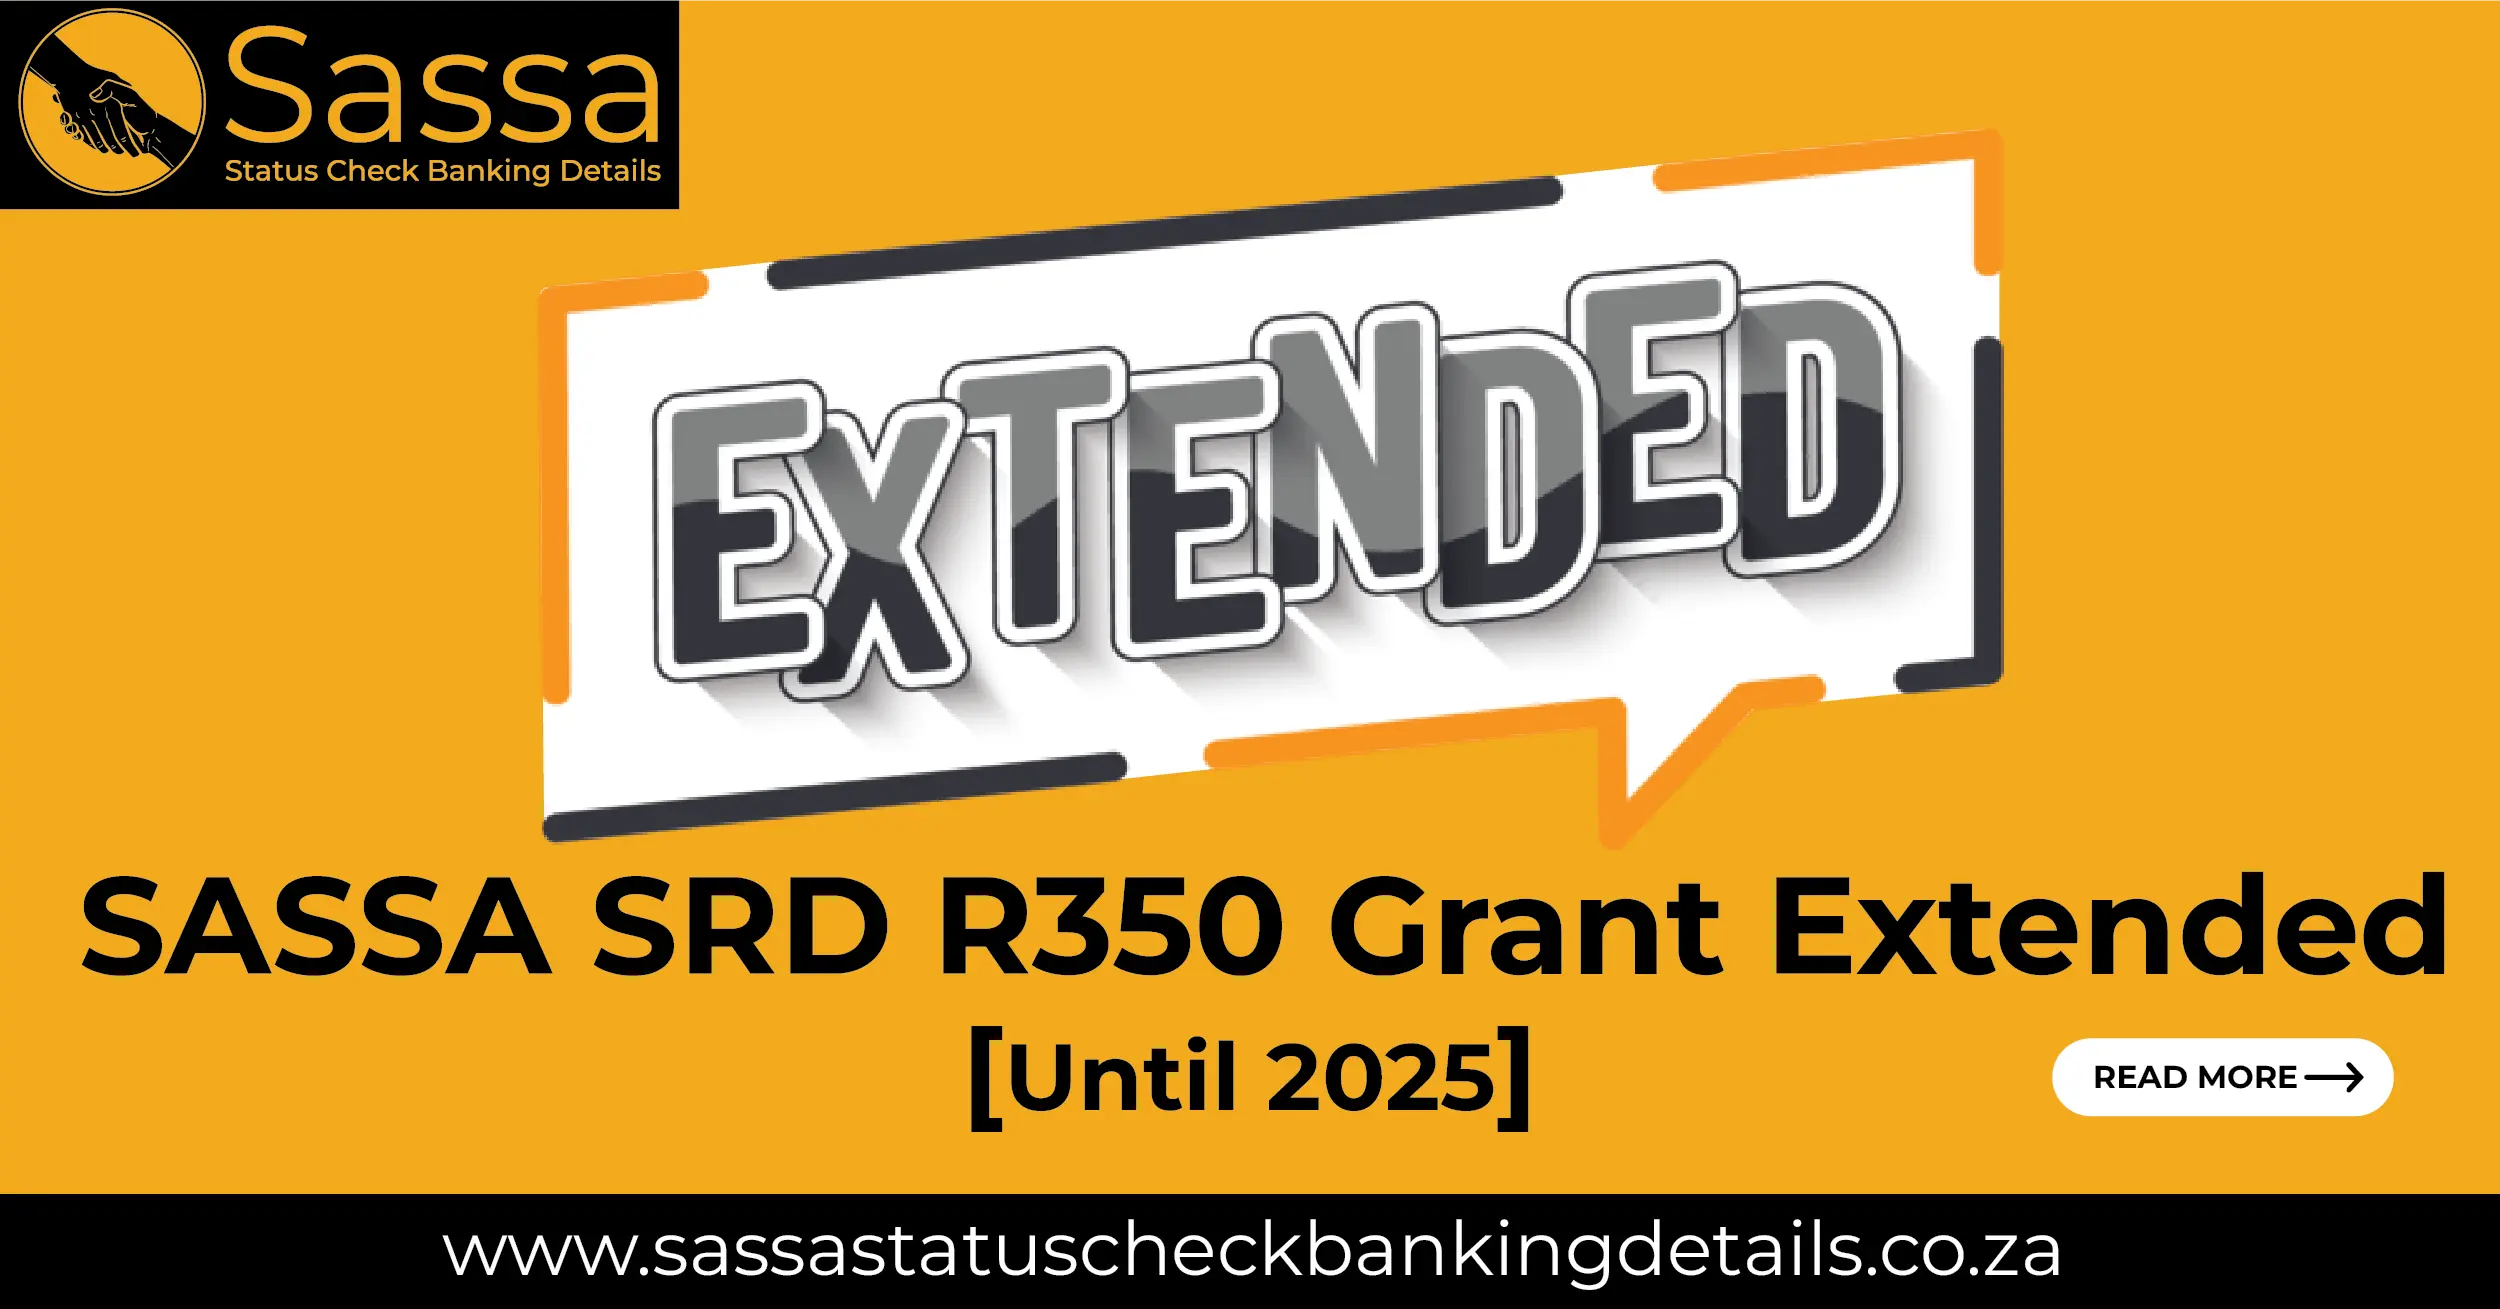 SASSA SRD R350 Grant Extended Until 2025